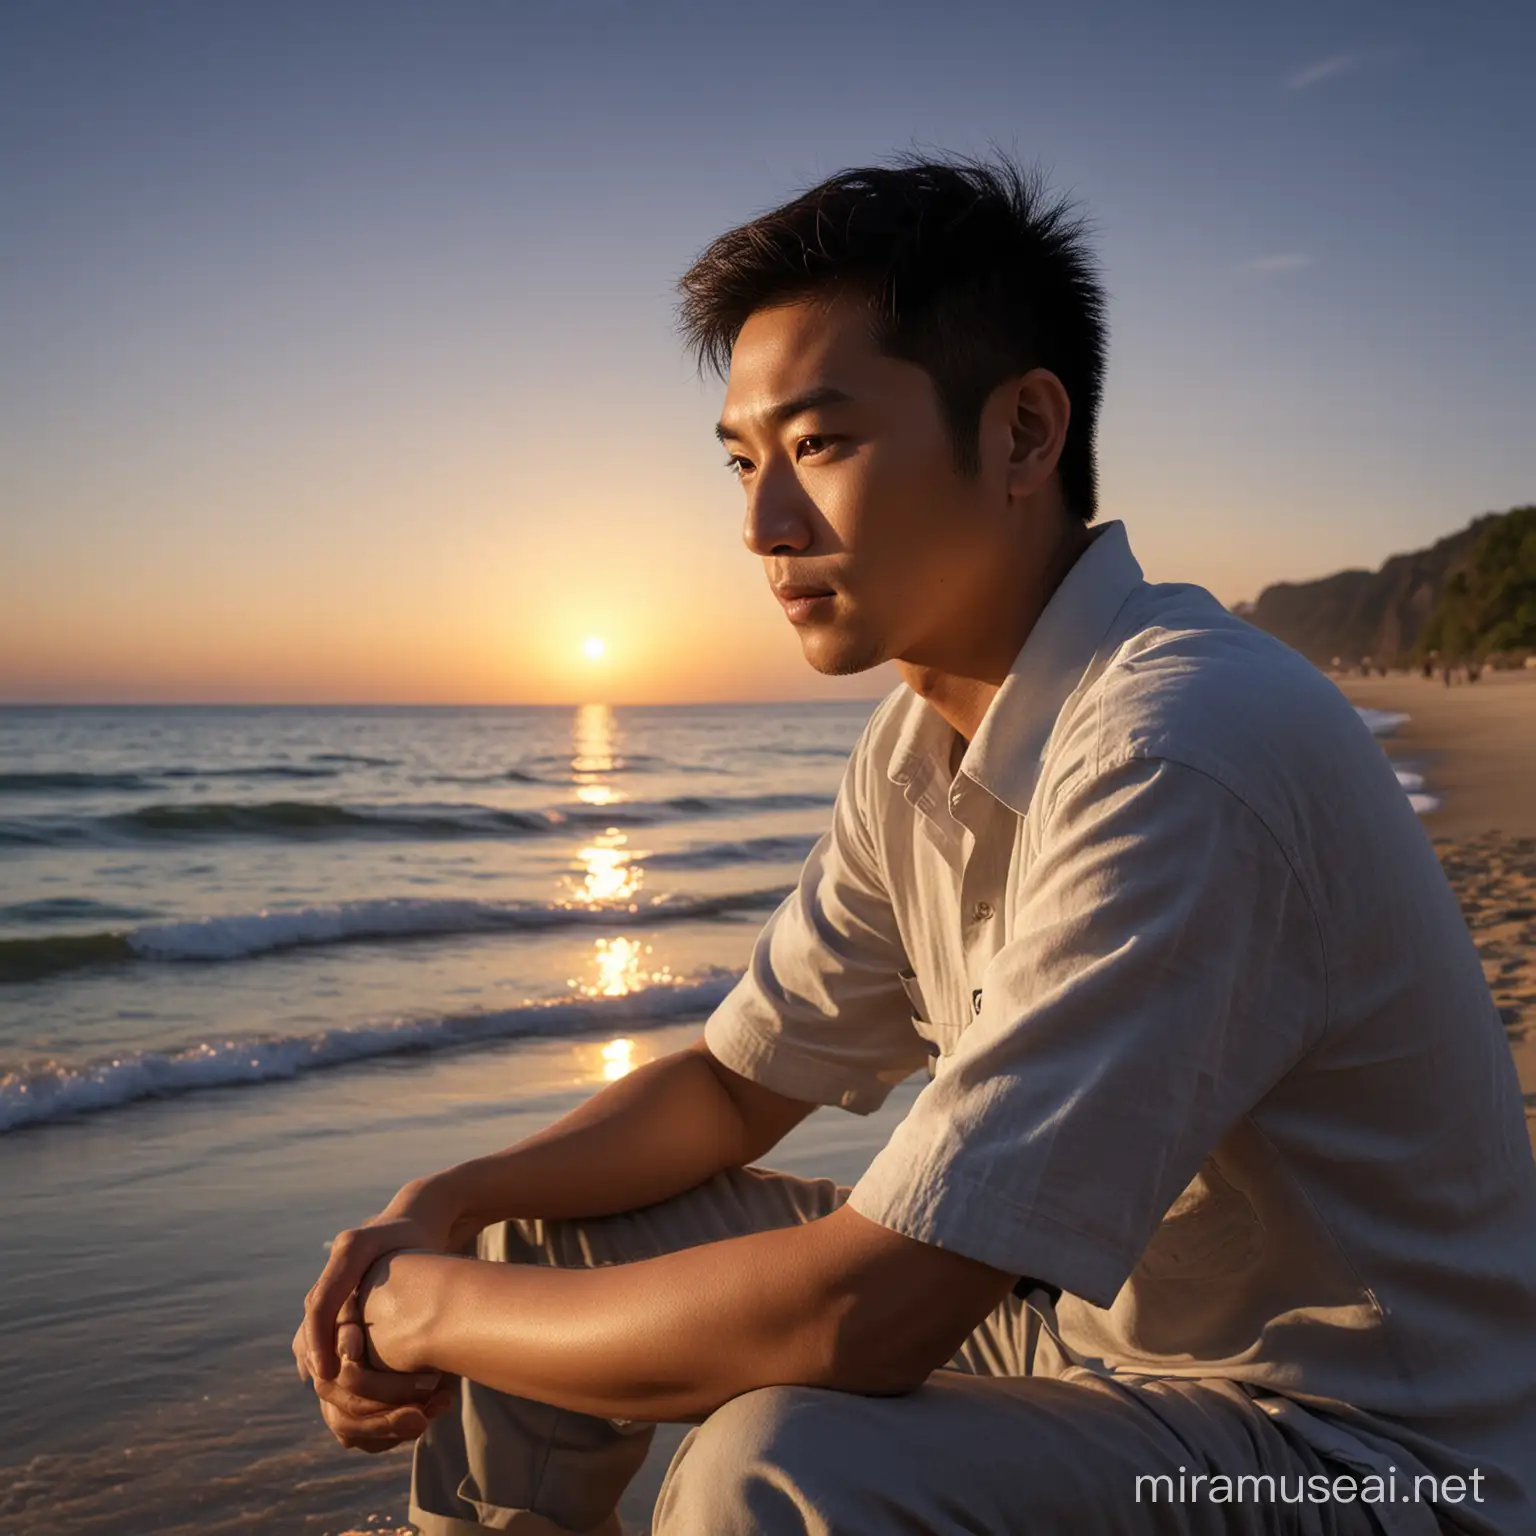 Gambar seorang lelaki asia sedang duduk di tepi pantai sore hari,dan sangat detail, sangat jernih, resolusi tinggi, penuh warna.